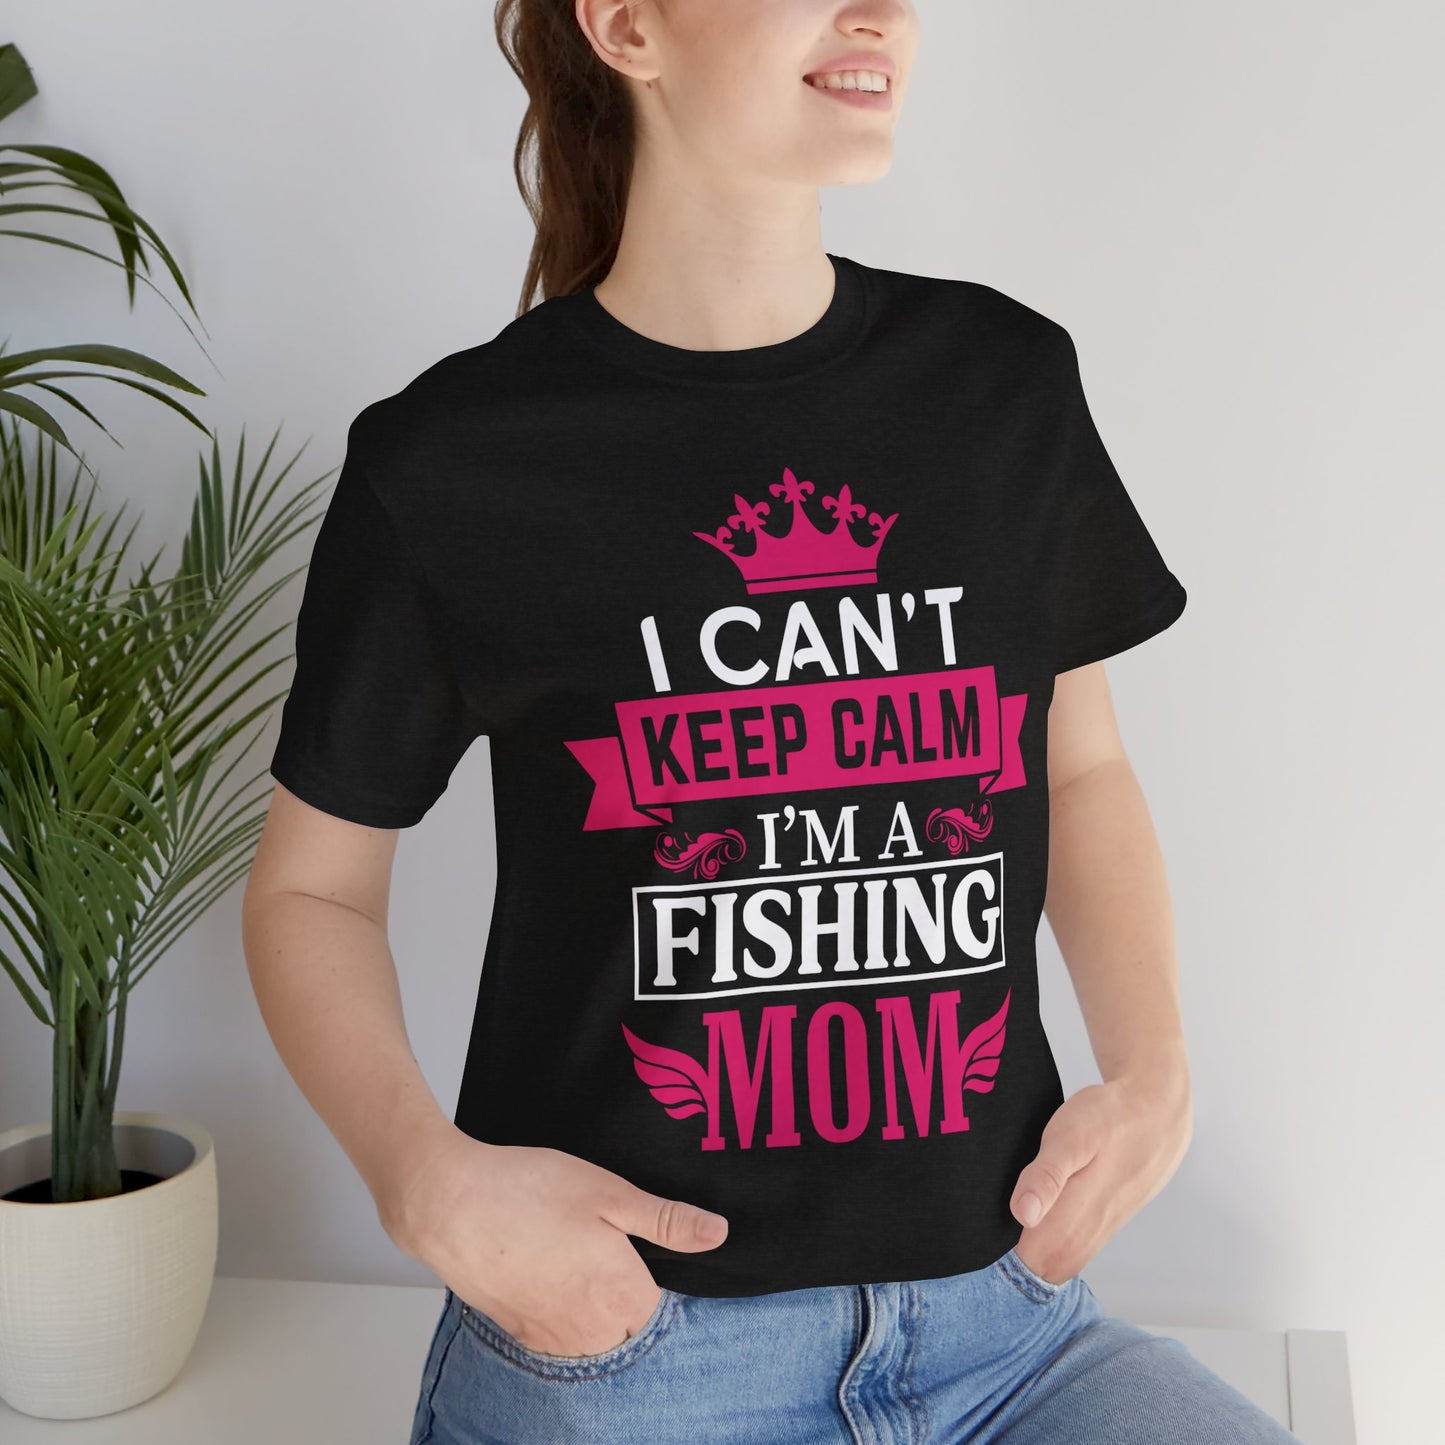 I Can't Keep Calm, I'm a Fishing Mom - T-Shirt